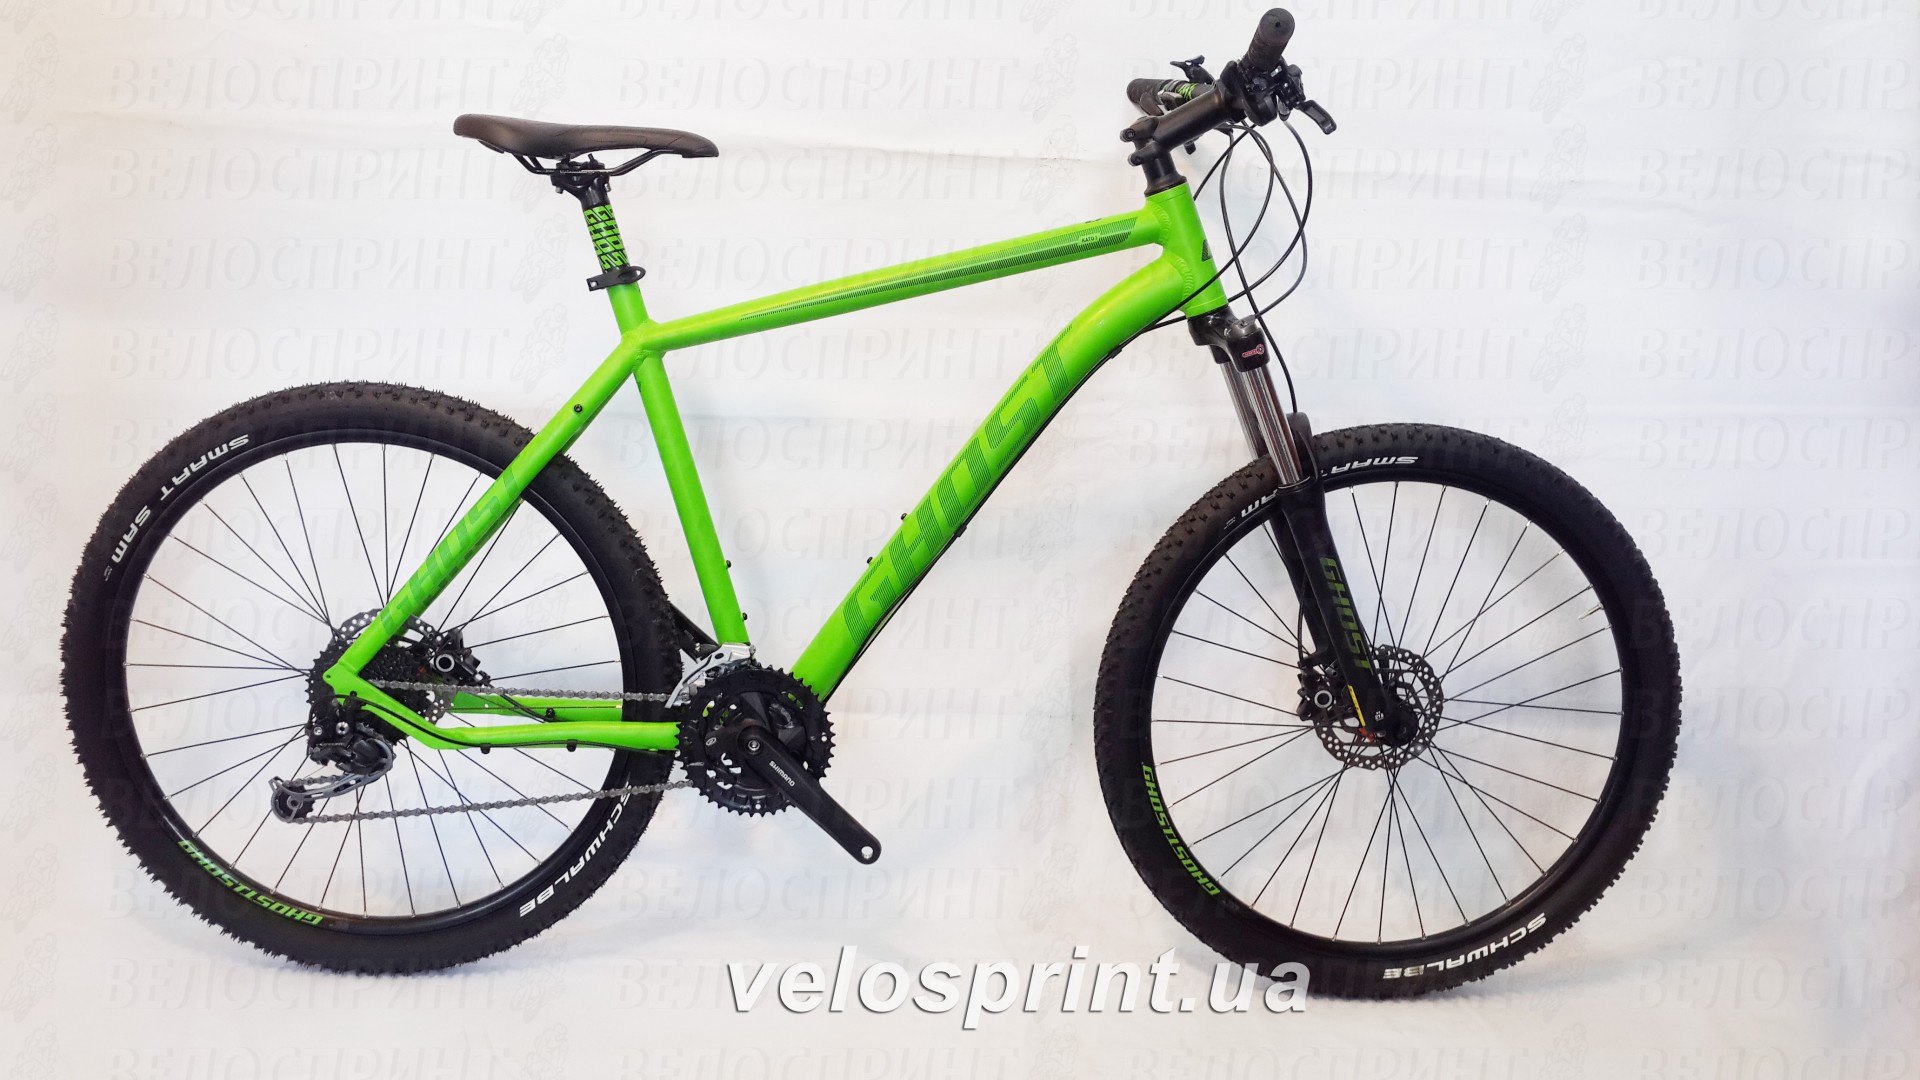 Велосипед GHOST Kato 3 green/darkgreen/black общий вид год 2016